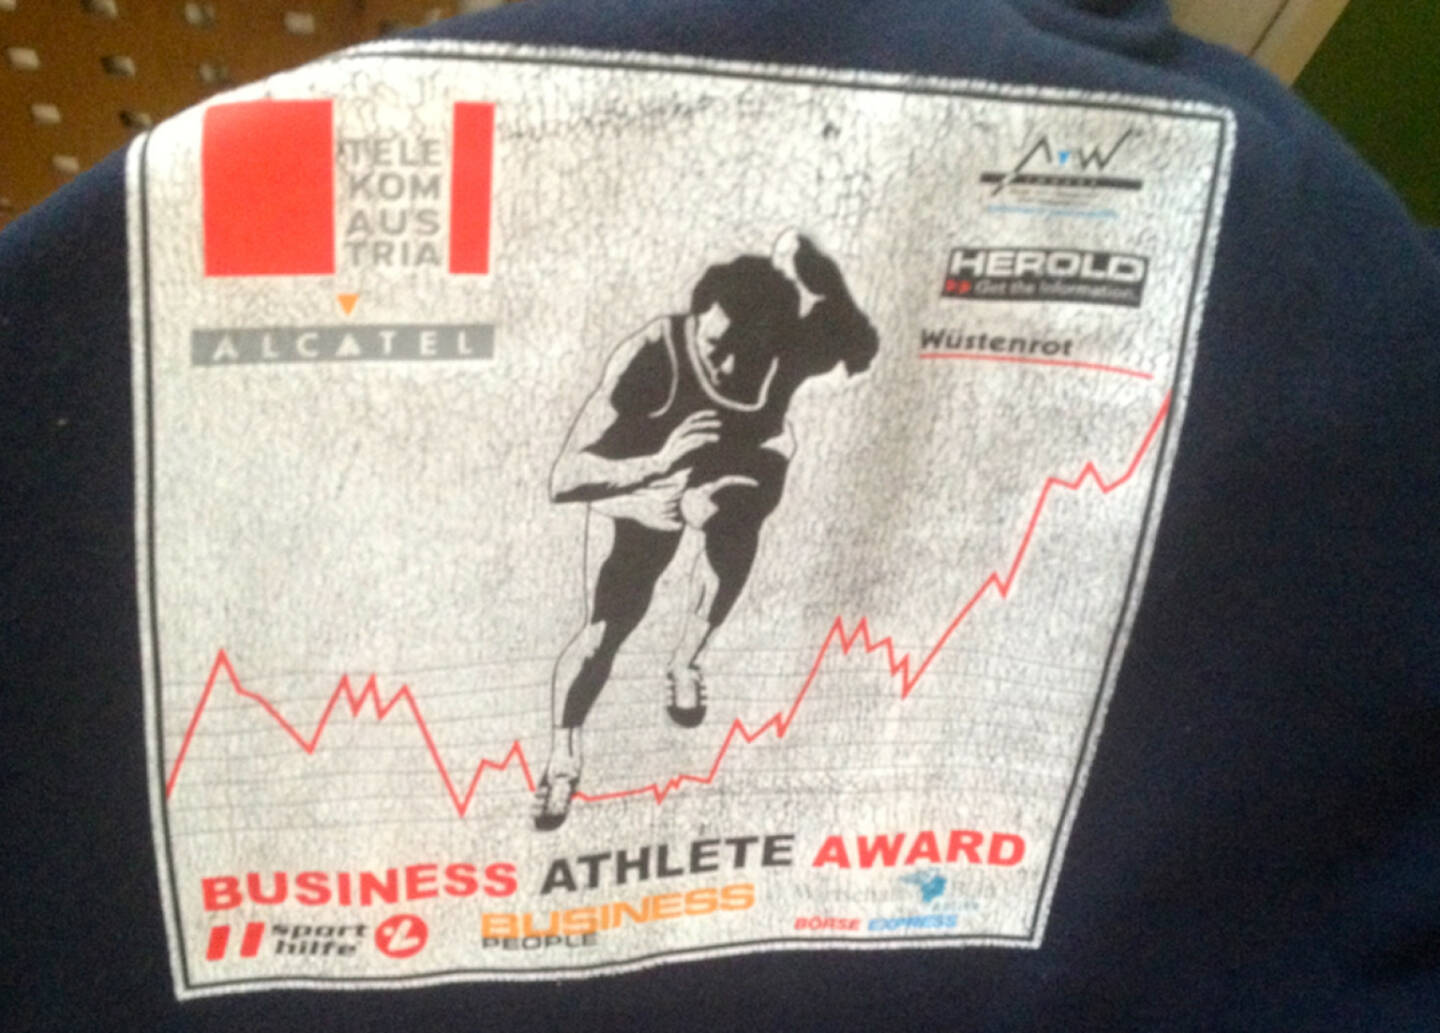 Business Athlete Award Vintage, heuer wieder neu als Runplugged Business Athlete Award mit der Sporthilfe, siehe http://www.christian-drastil.com/2014/04/25/freude_der_business_athlete_award_gehort_mir